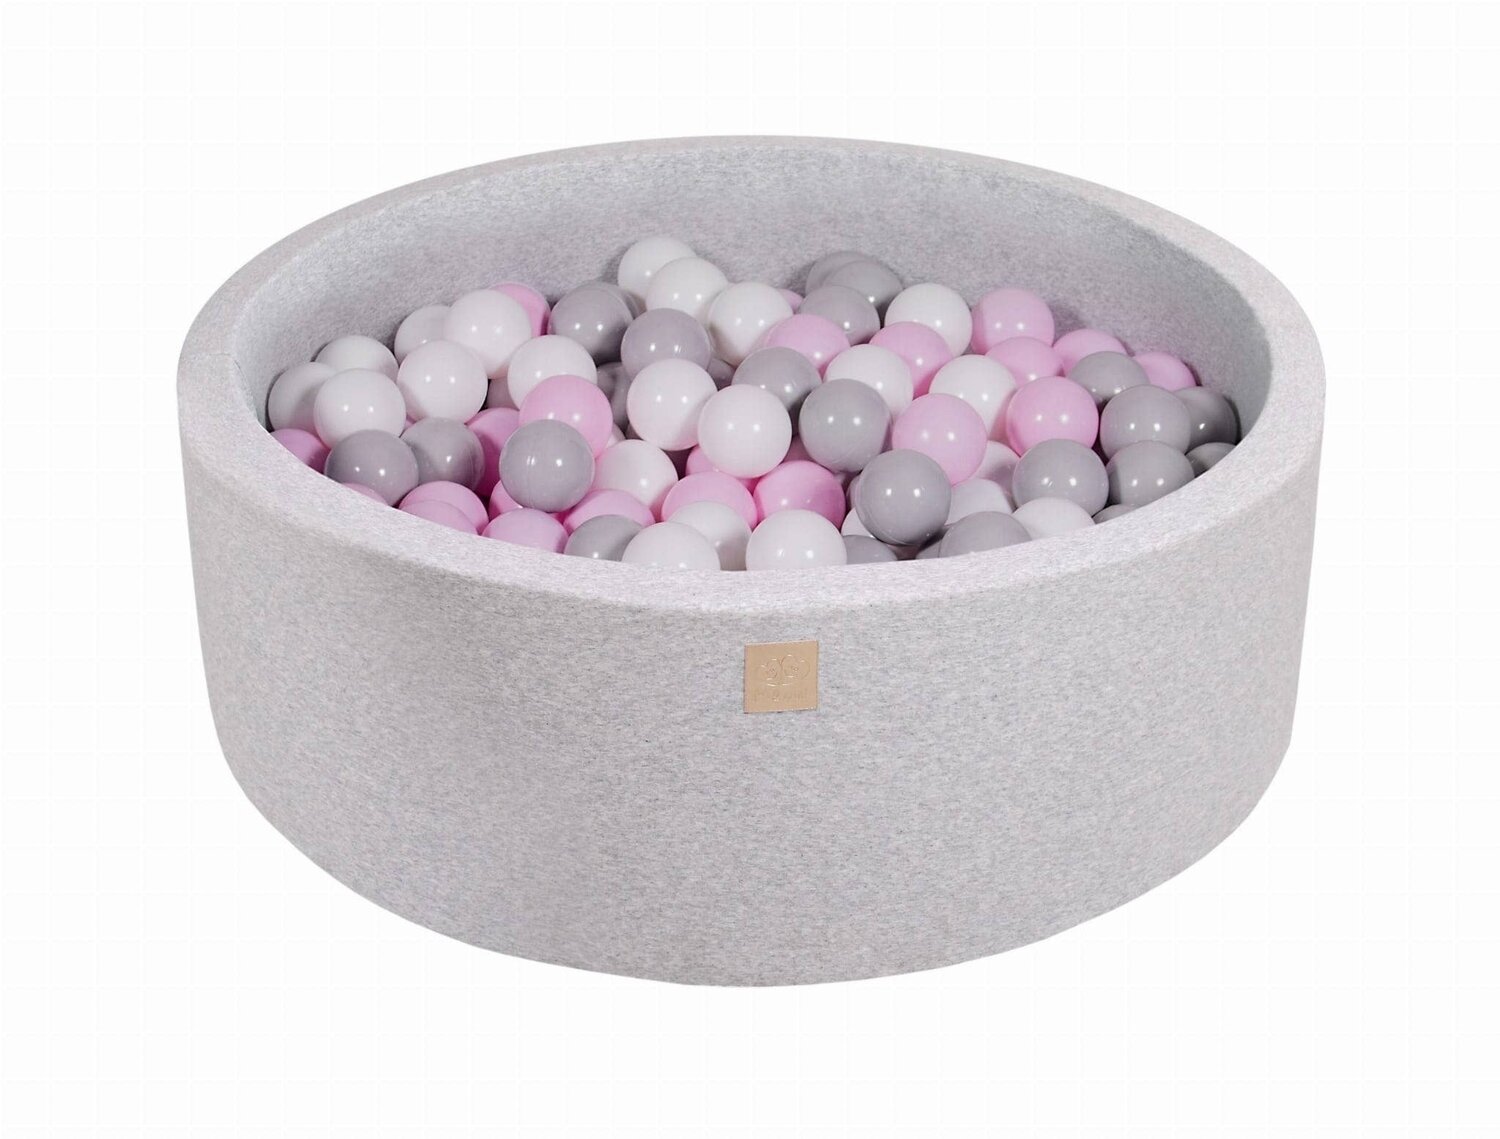 90 x 40 cm, Light Grey: Transparent/Grey/White/Light Pink/Mint MEOWBABY Foam Ball Pit 90X40cm/300 Balls ∅ 7Cm Baby Ball Pool Certified Made In EU Light Grey